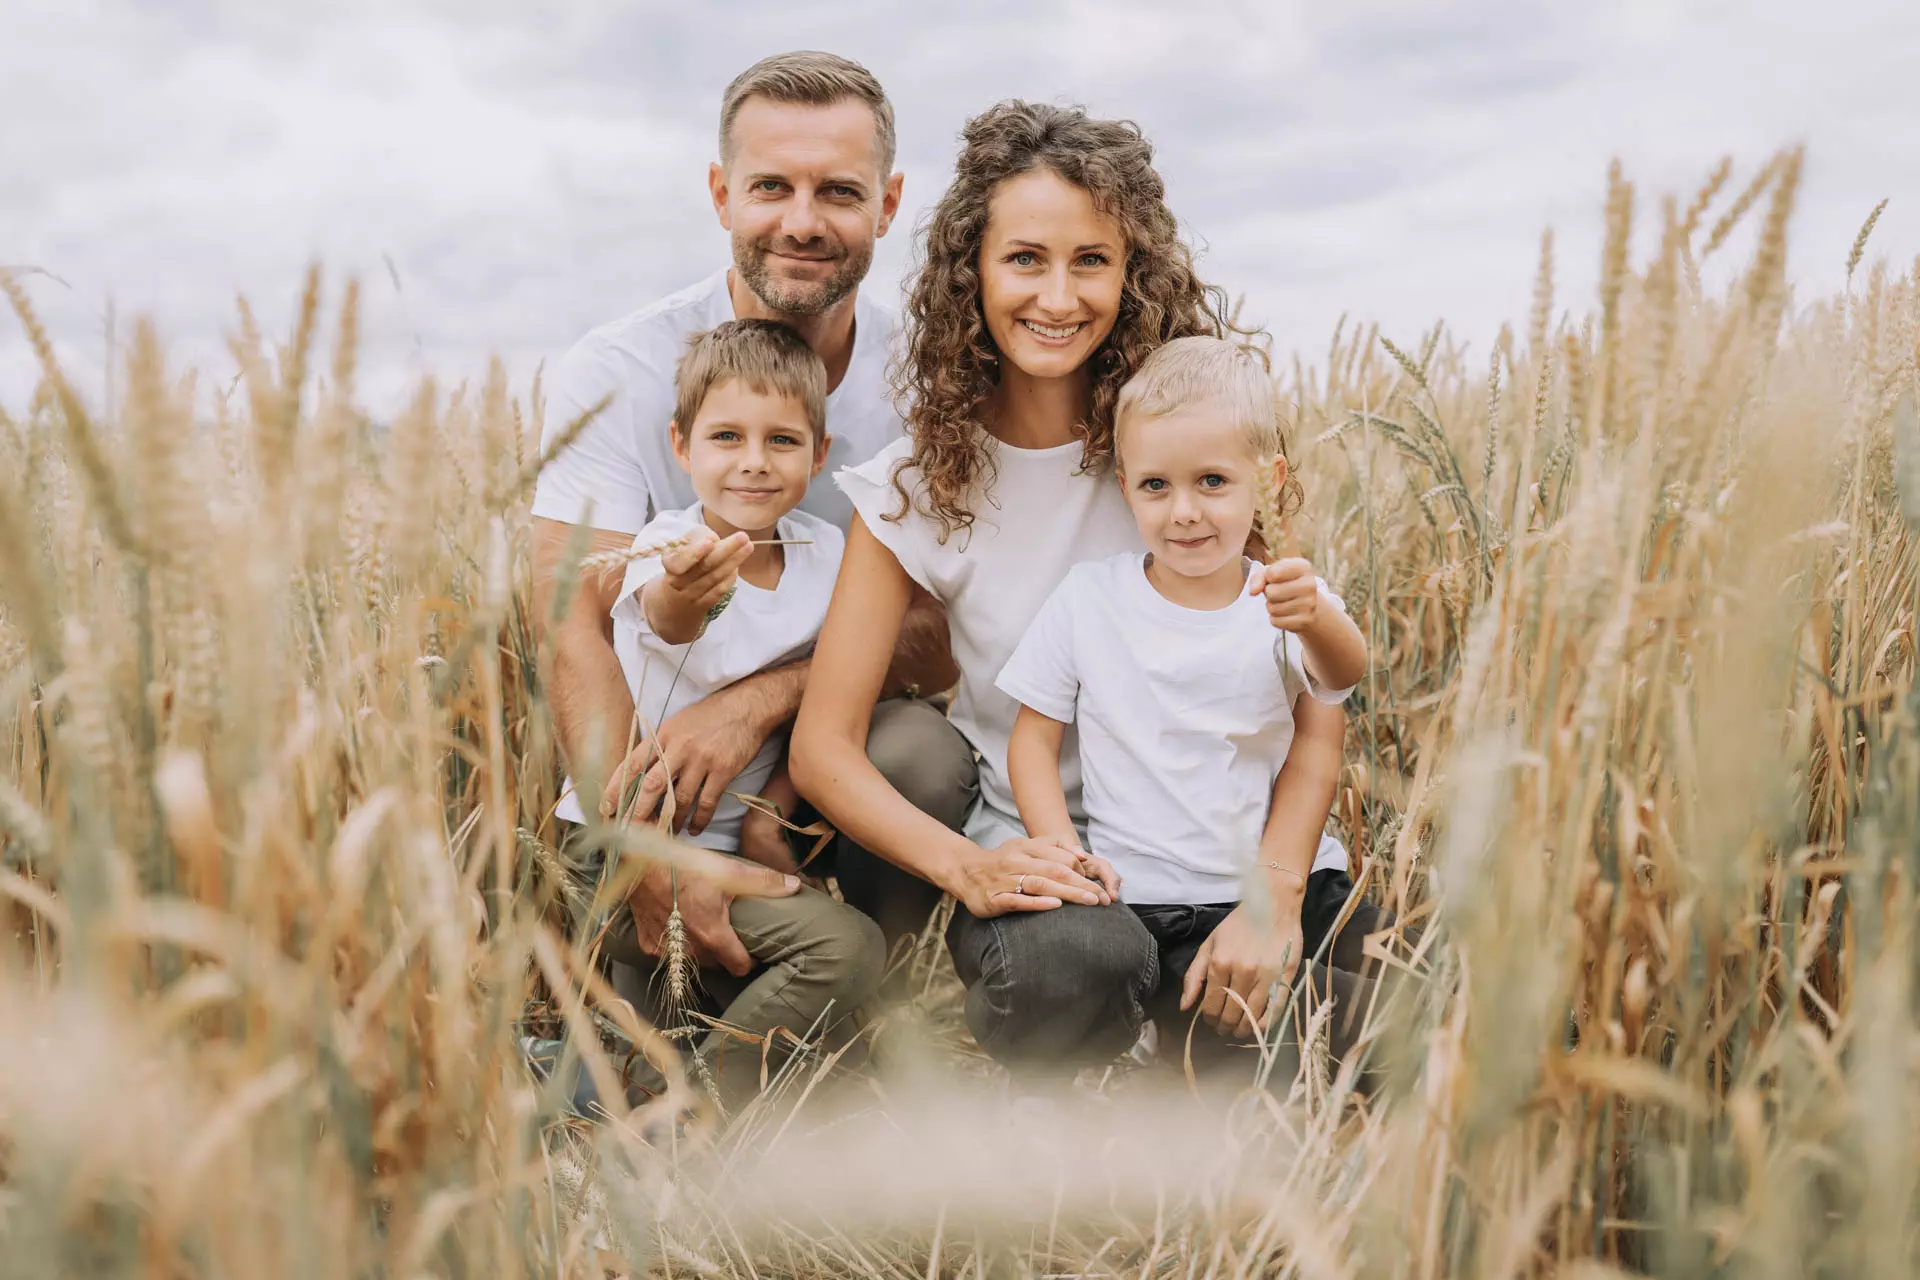 Rodinné fotenie s deťmi na lúke v pšenici